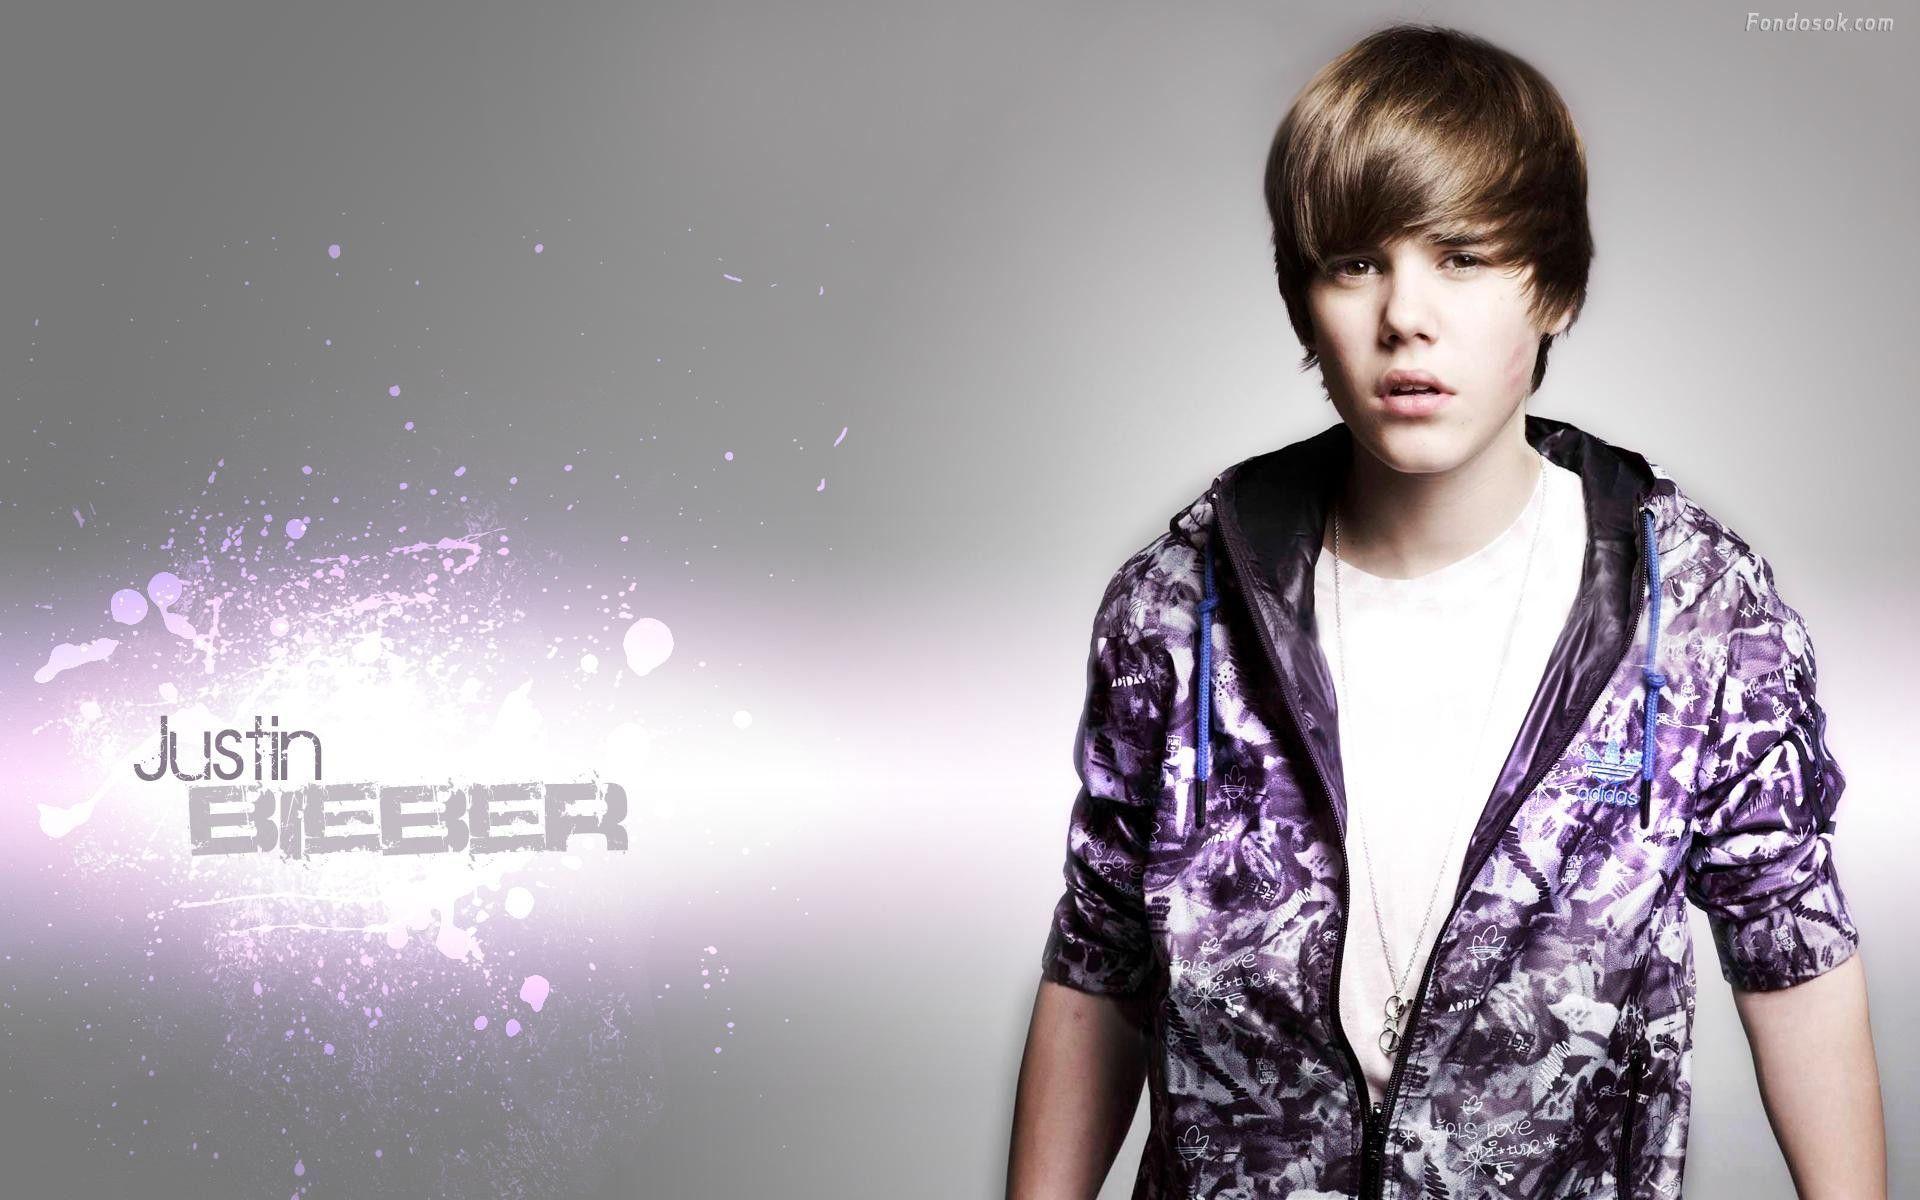 Justin Bieber Wallpaper 8262 High Definition Wallpaper. wallalay.com